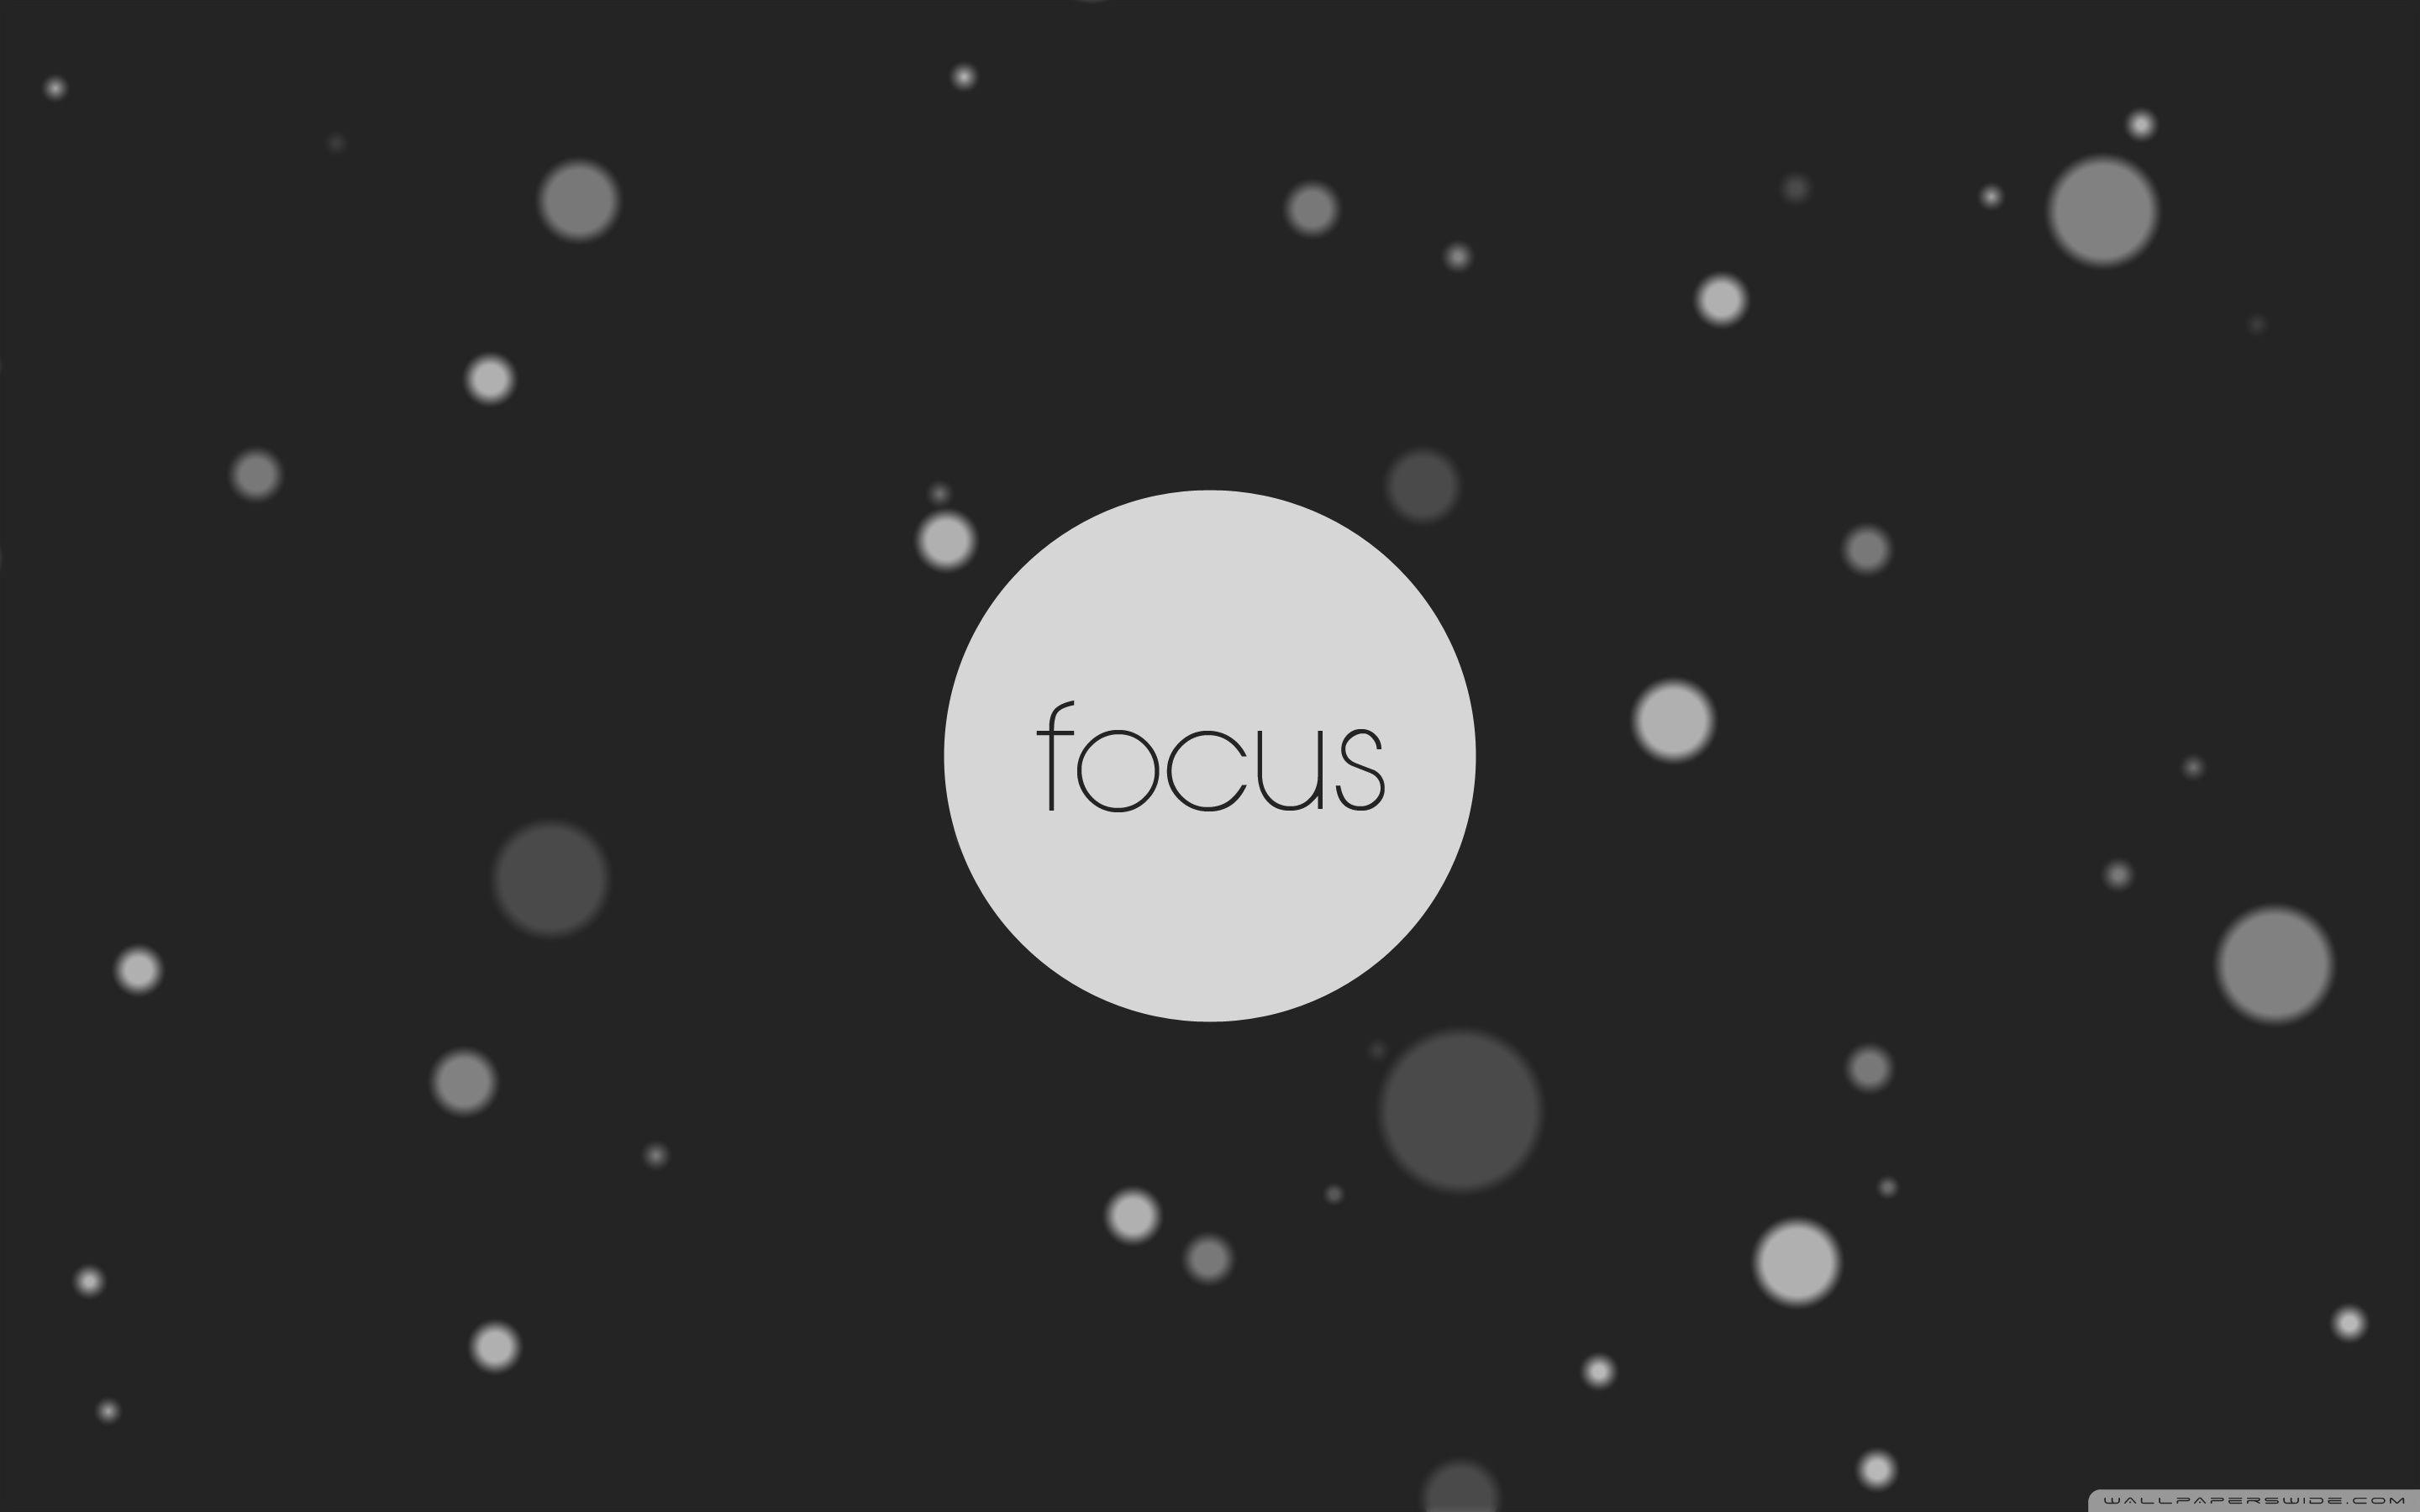 Focus Wallpaper